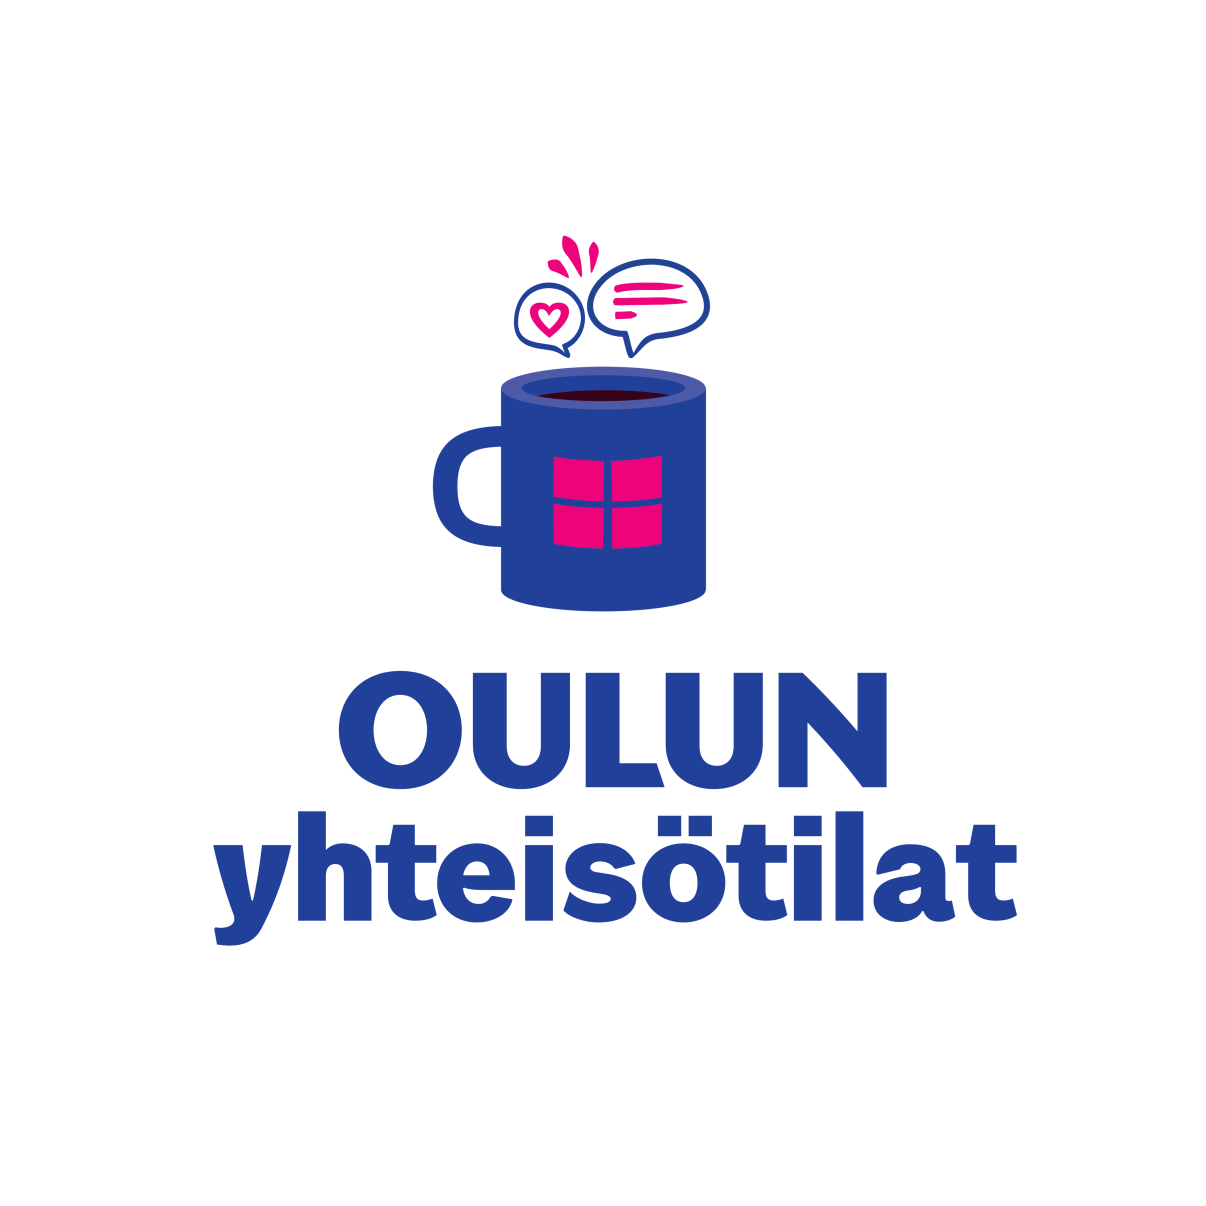 Oulu Community Facility Logo. The logo features a coffee mug.